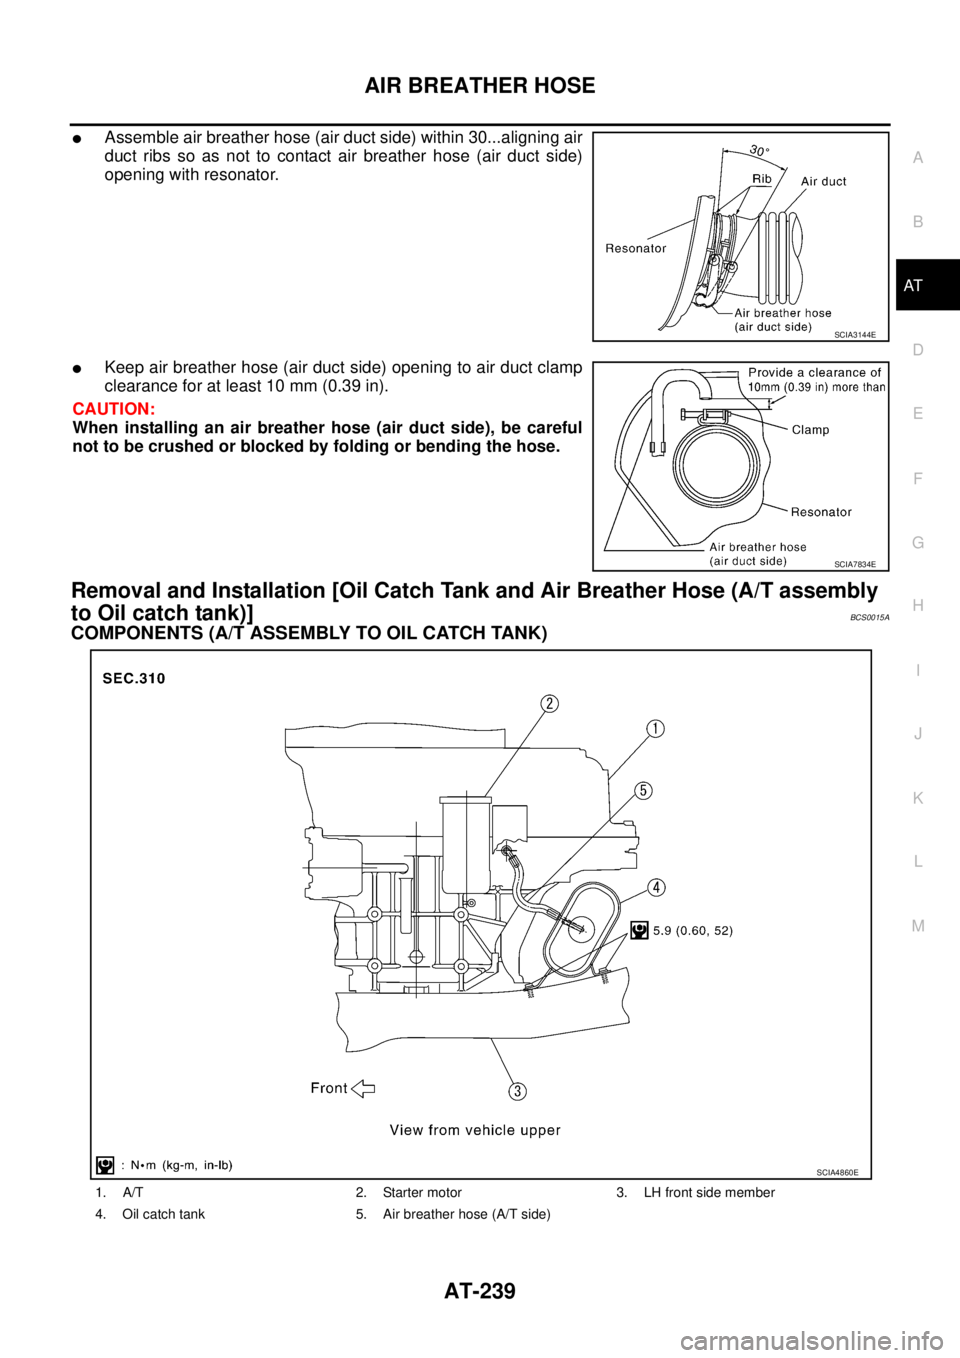 NISSAN TEANA 2003  Service Manual AIR BREATHER HOSE
AT-239
D
E
F
G
H
I
J
K
L
MA
B
AT
 
Assemble air breather hose (air duct side) within 30...aligning air
duct ribs so as not to contact air breather hose (air duct side)
opening with 